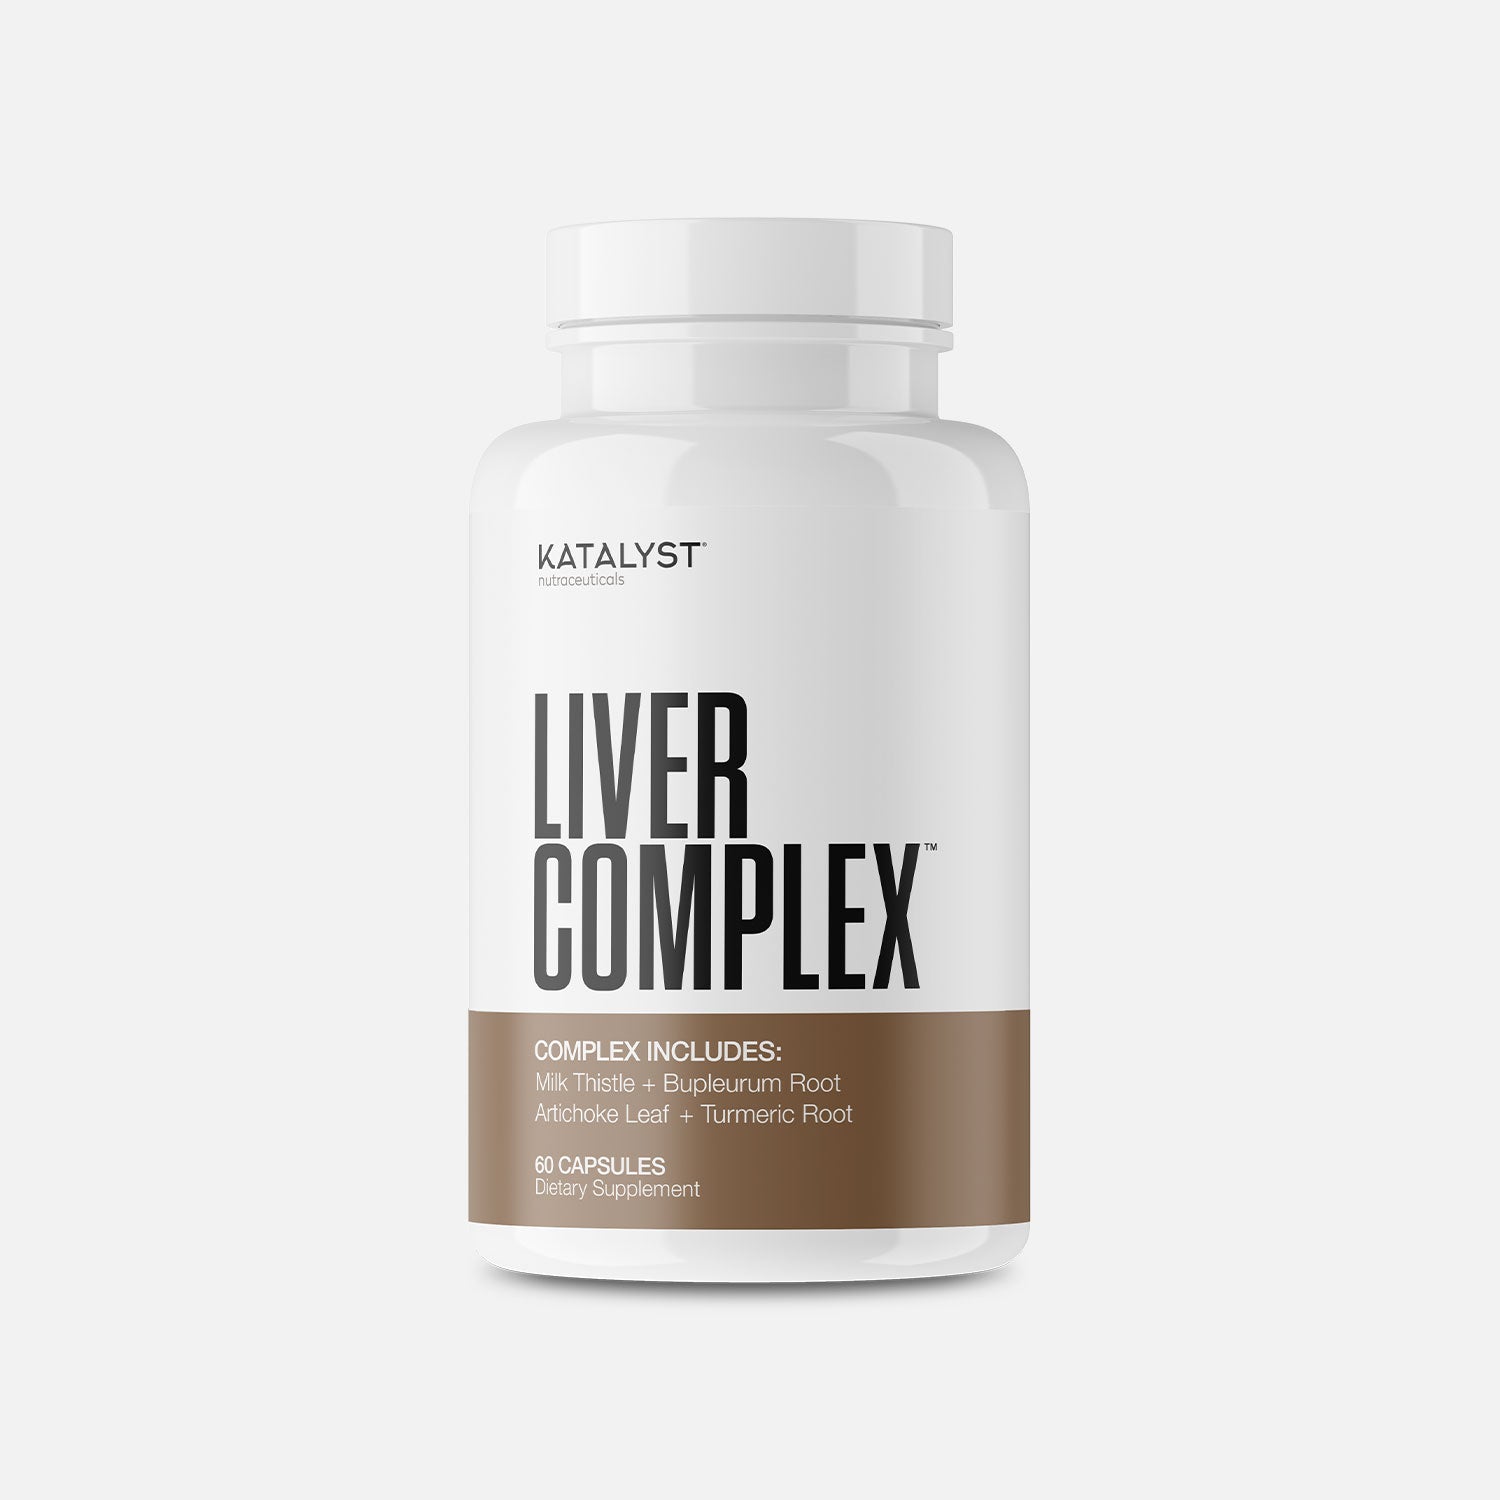 Liver Complex